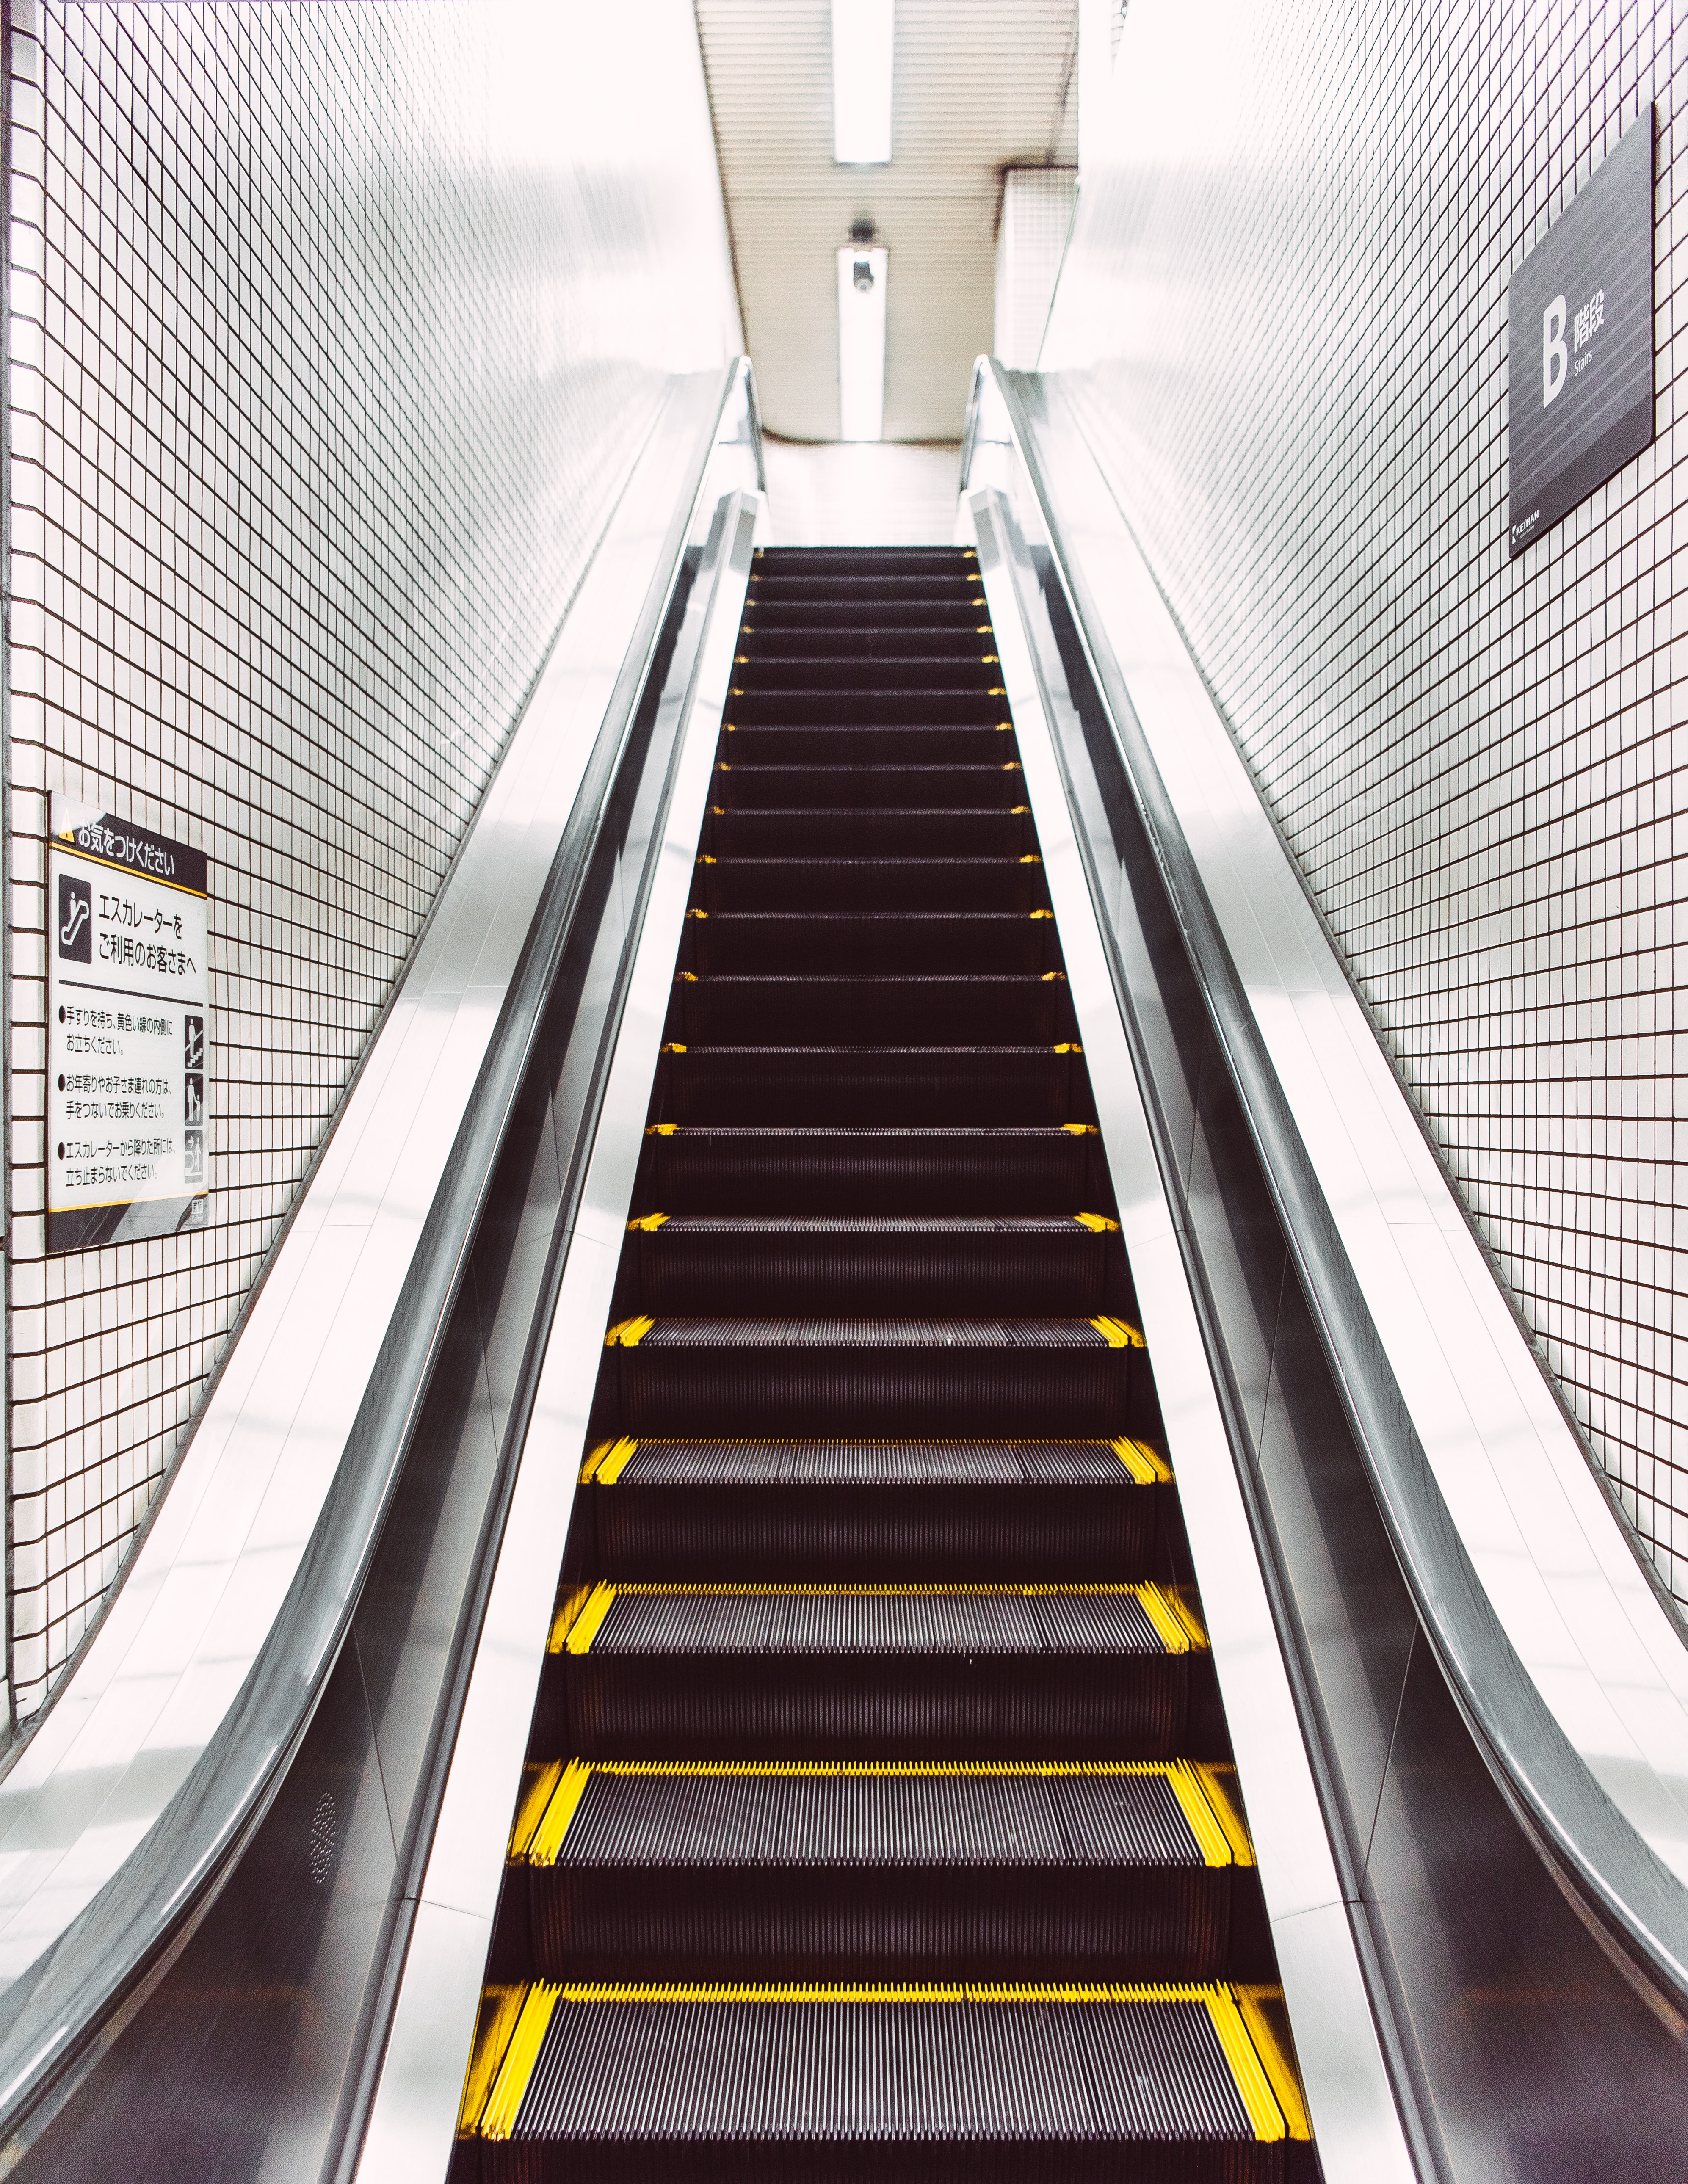 escalator, miscellanea, miscellaneous, stairs, ladder, steps, metro, subway